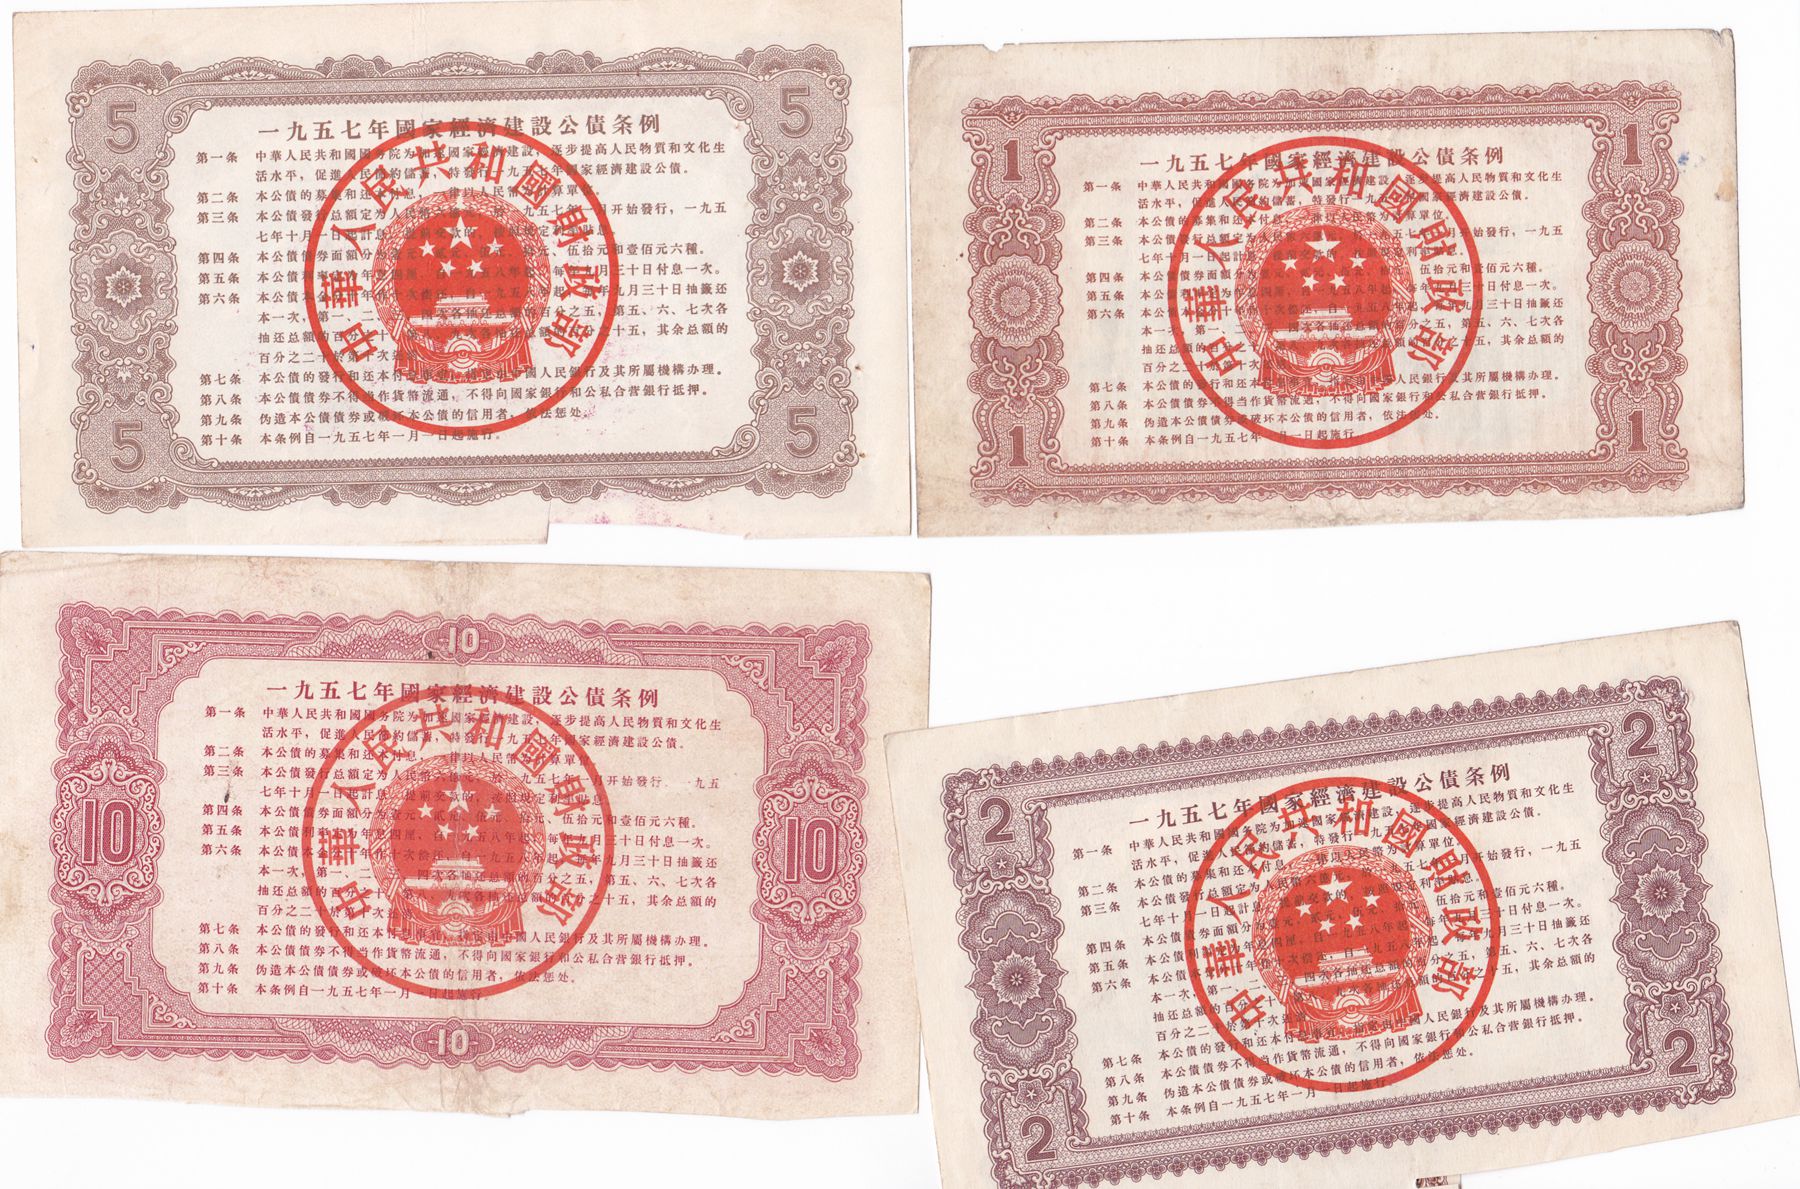 B6100, China 4% Construction Bond 4 Pcs 10,000 to 100,000 Dollars, 1957